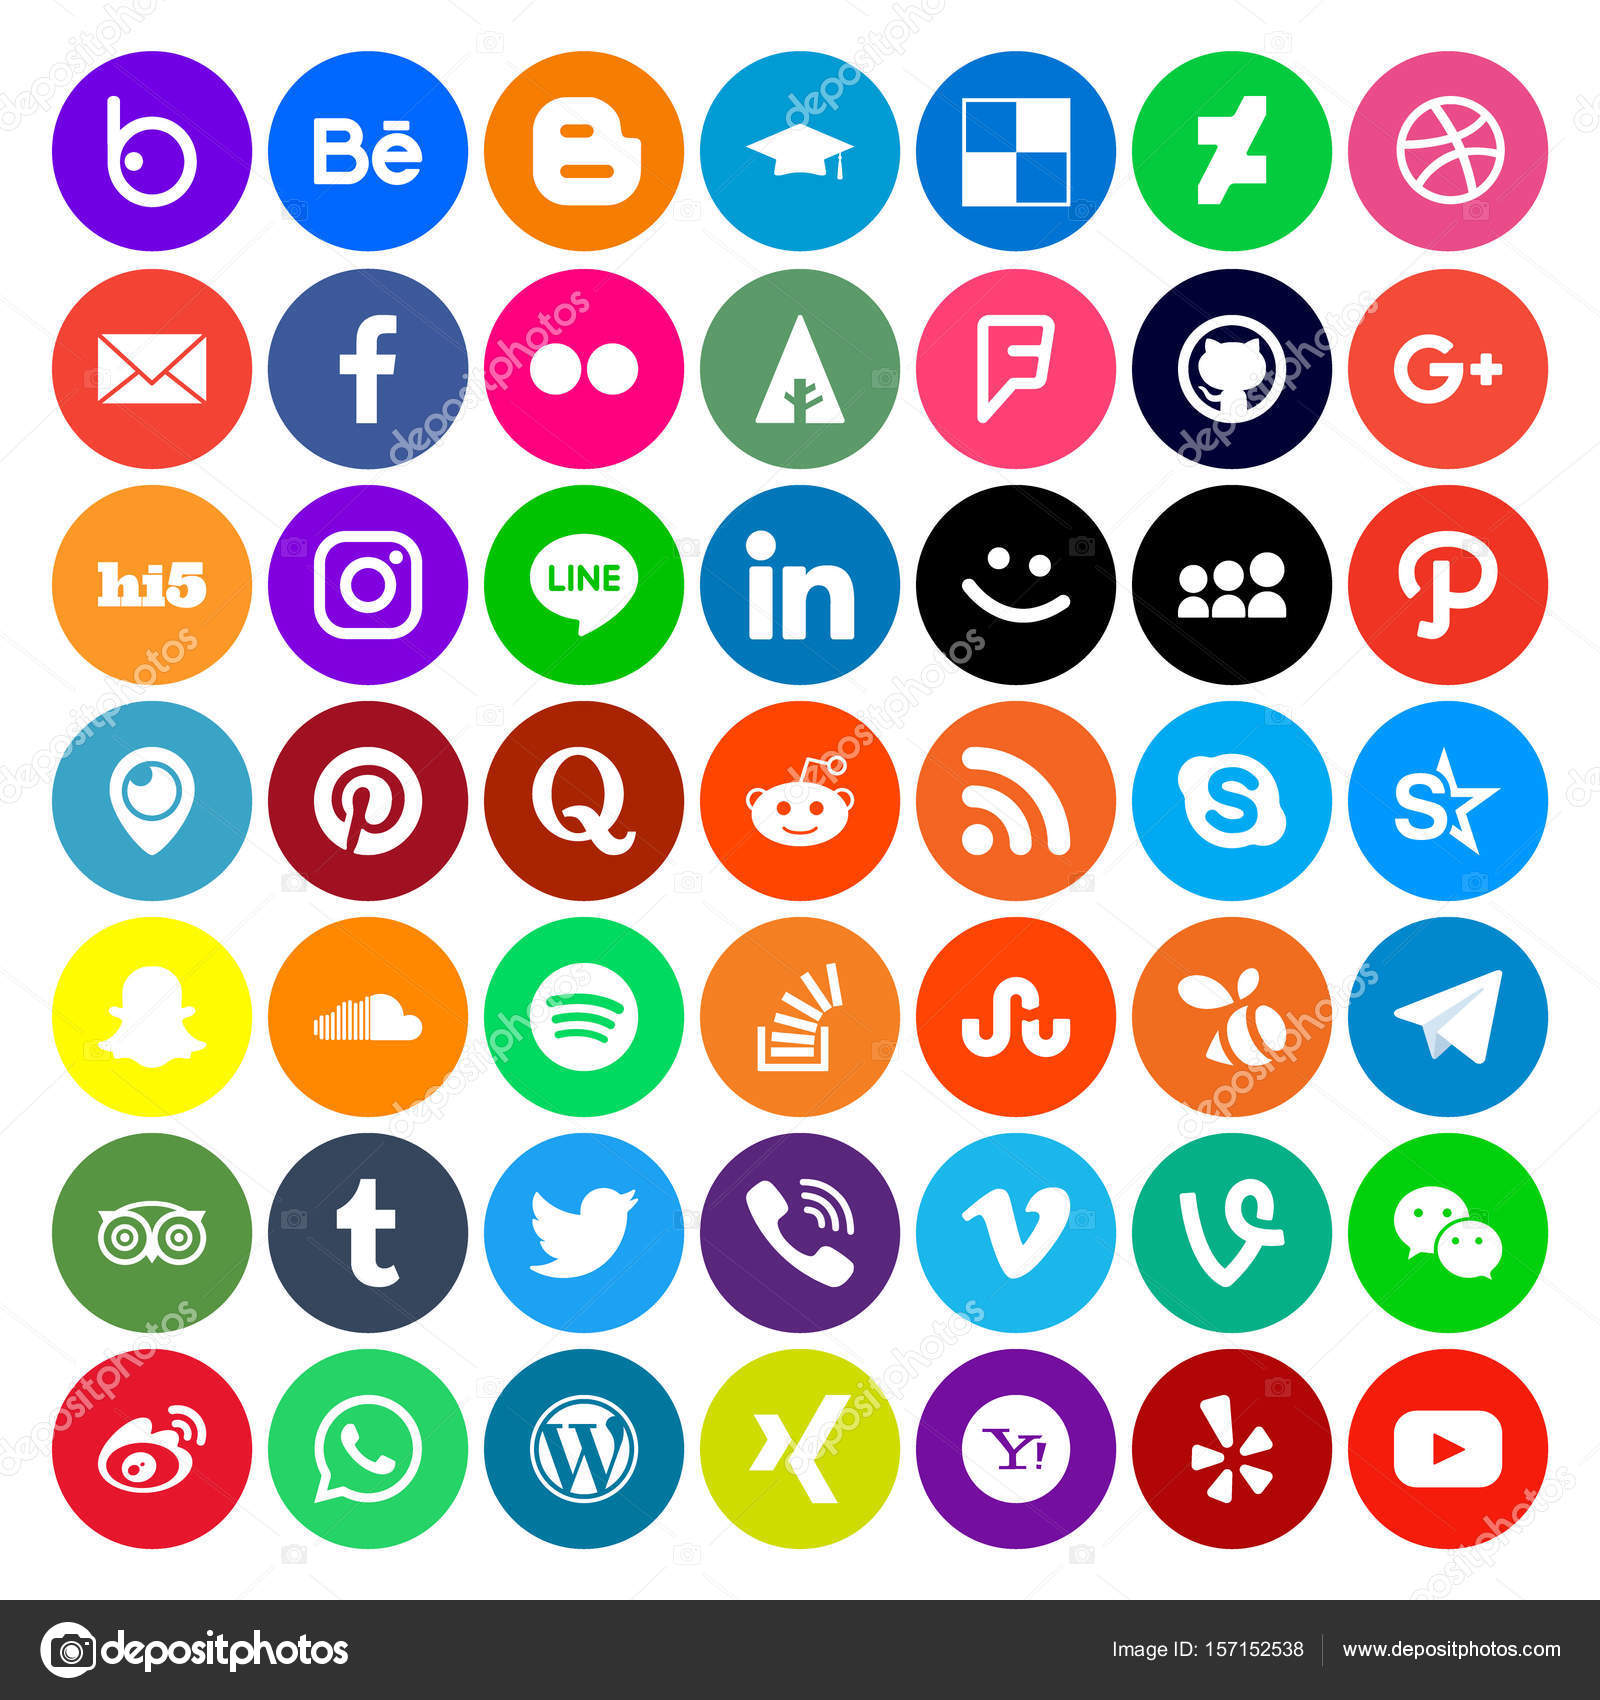 Foursquare logo - Social media & Logos Icons